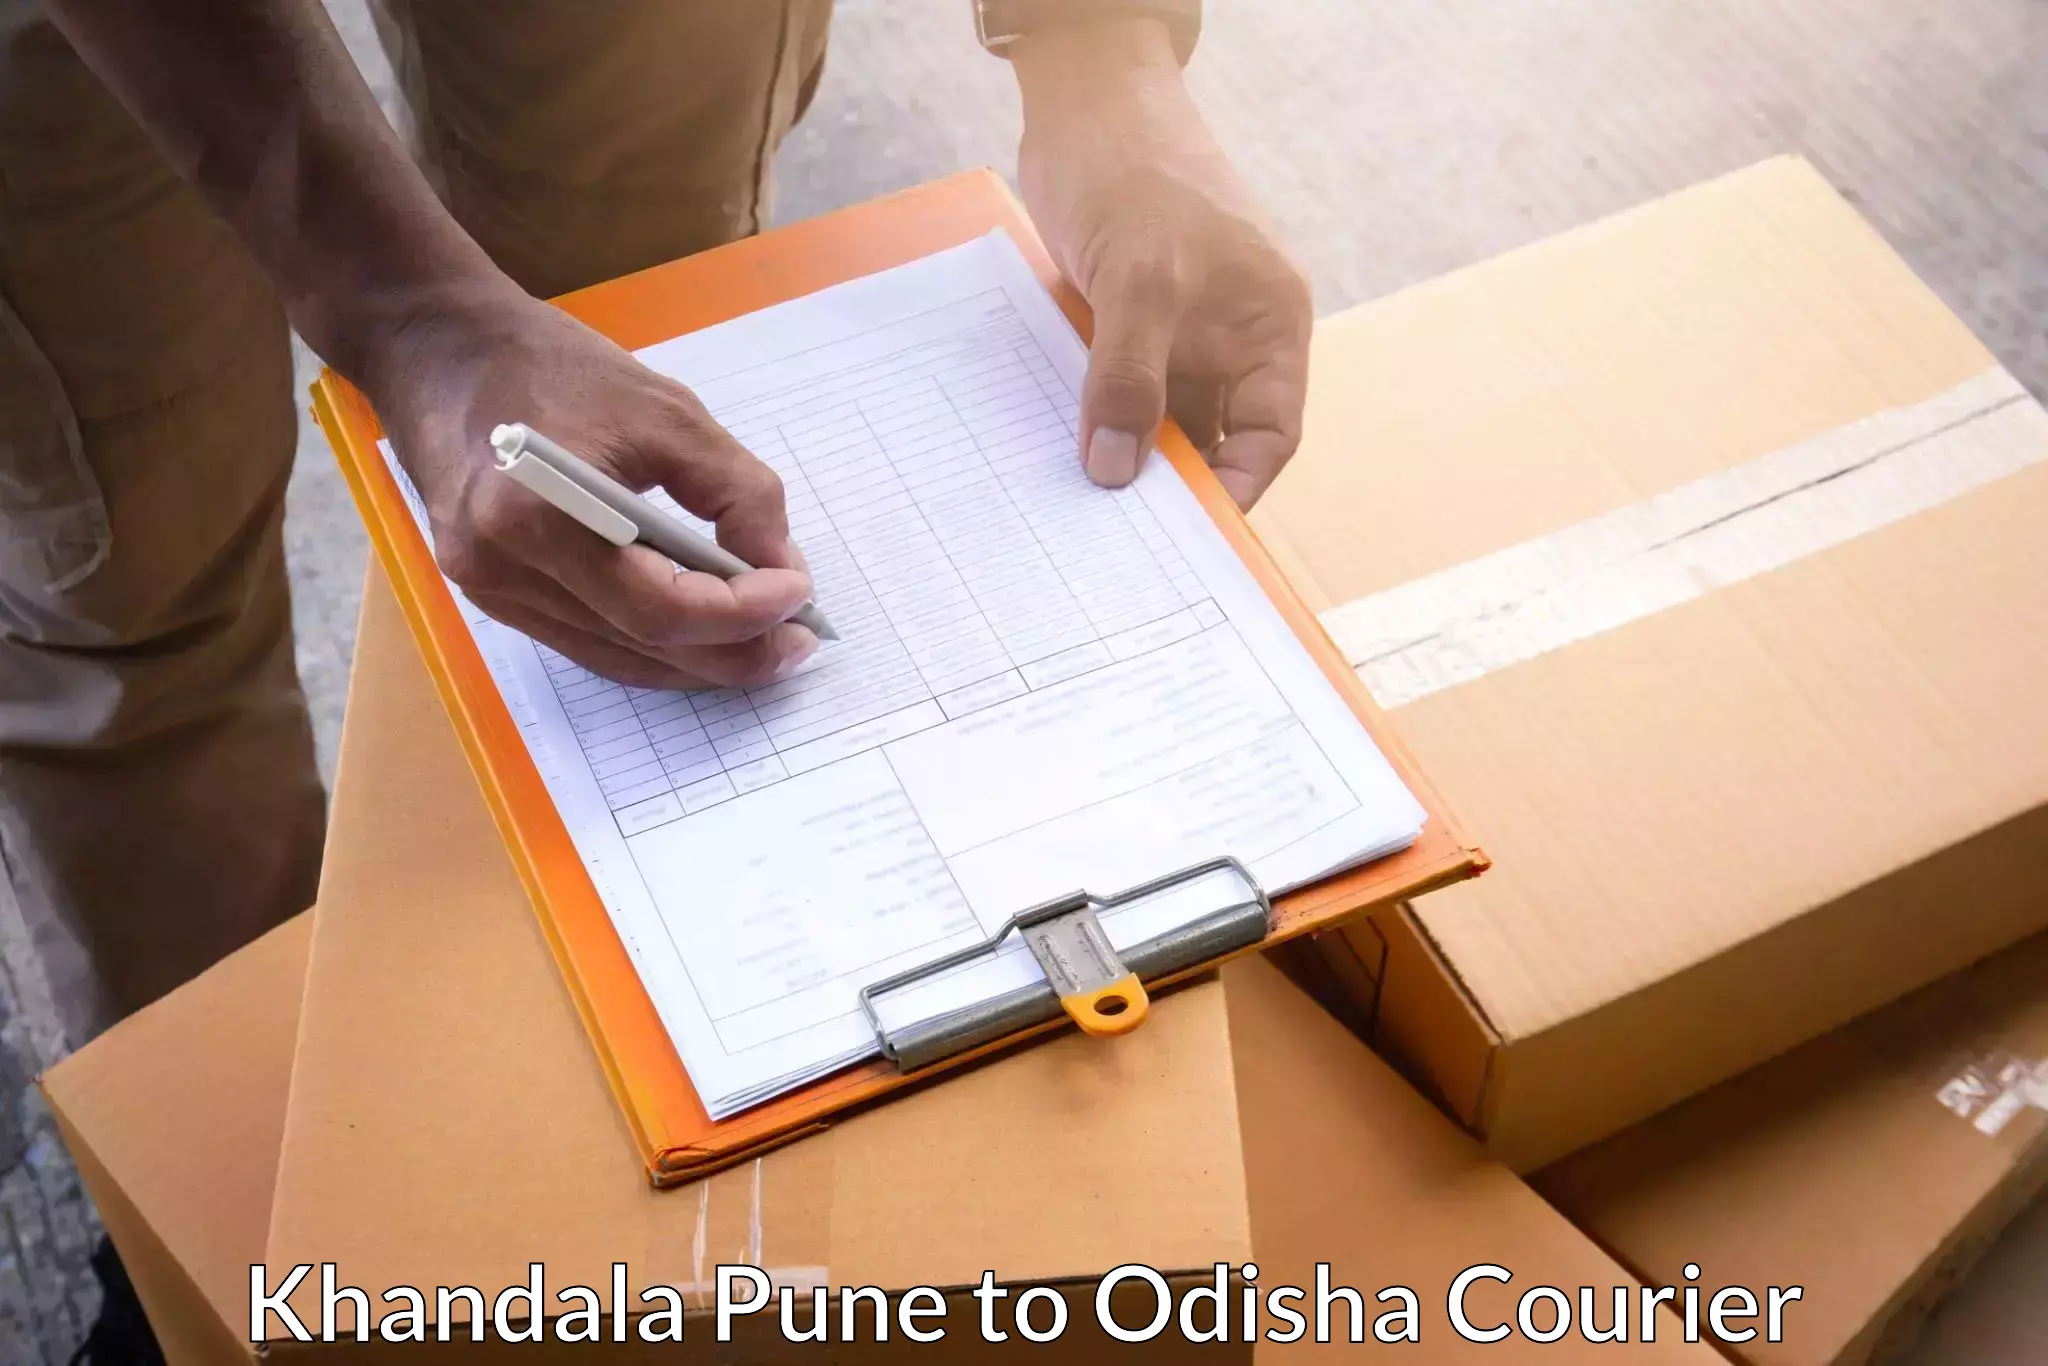 Express logistics service Khandala Pune to Odisha